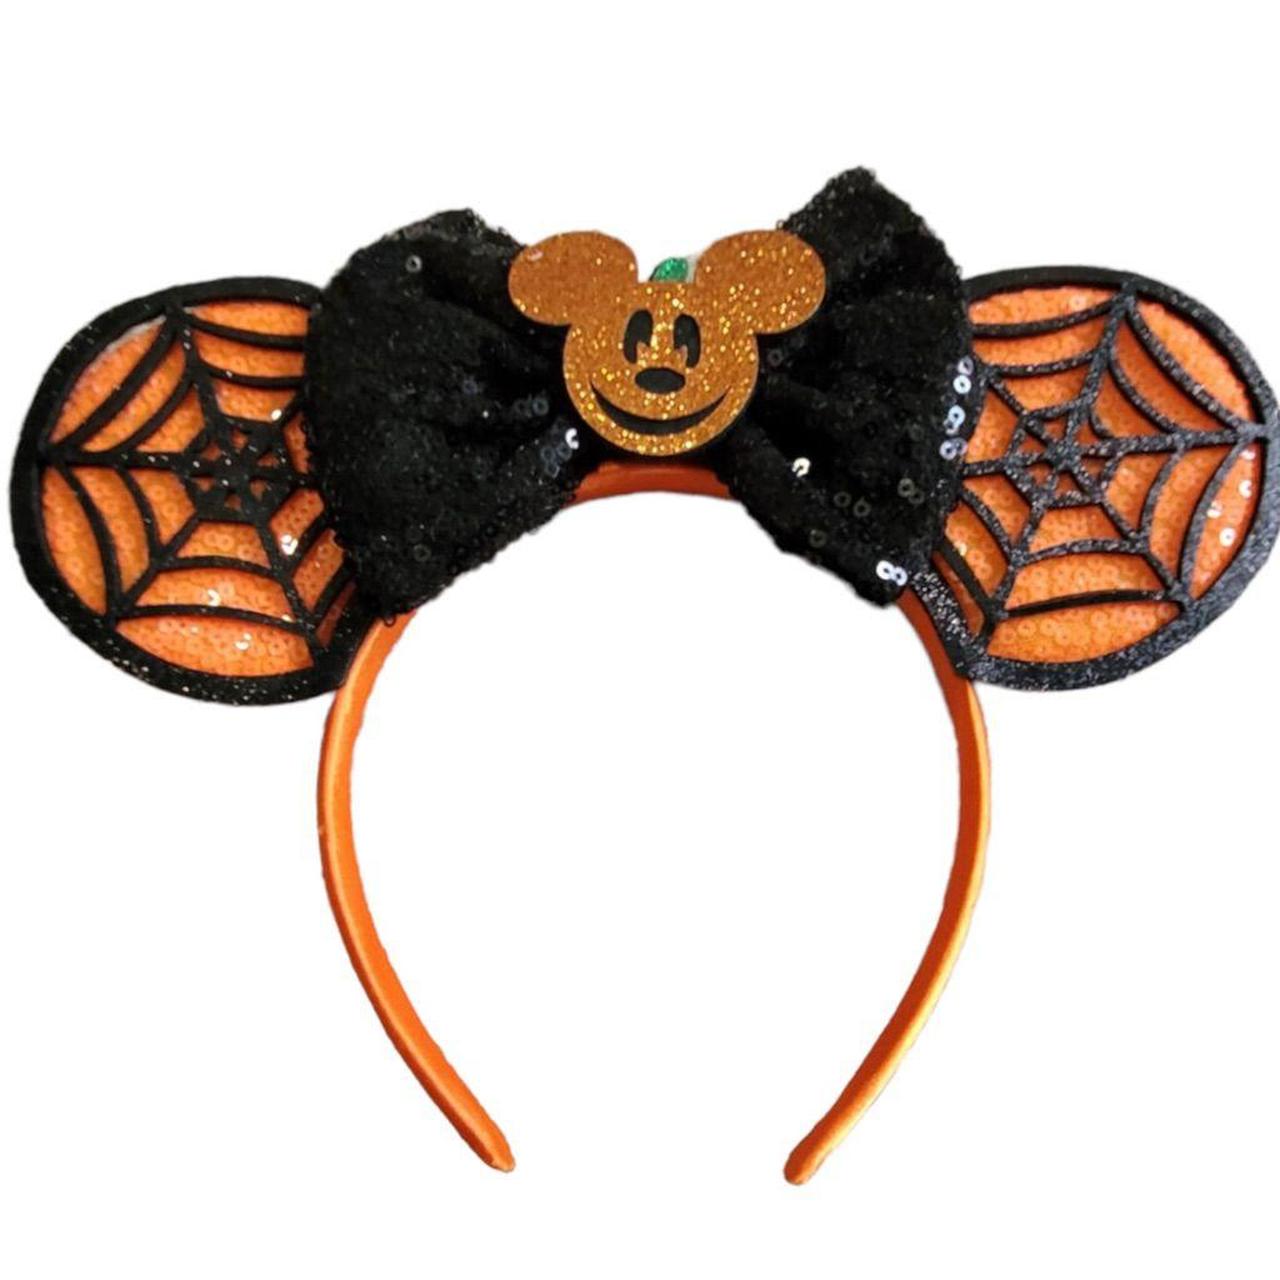 Product Image 1 - New Handmade Halloween Mouse Ears